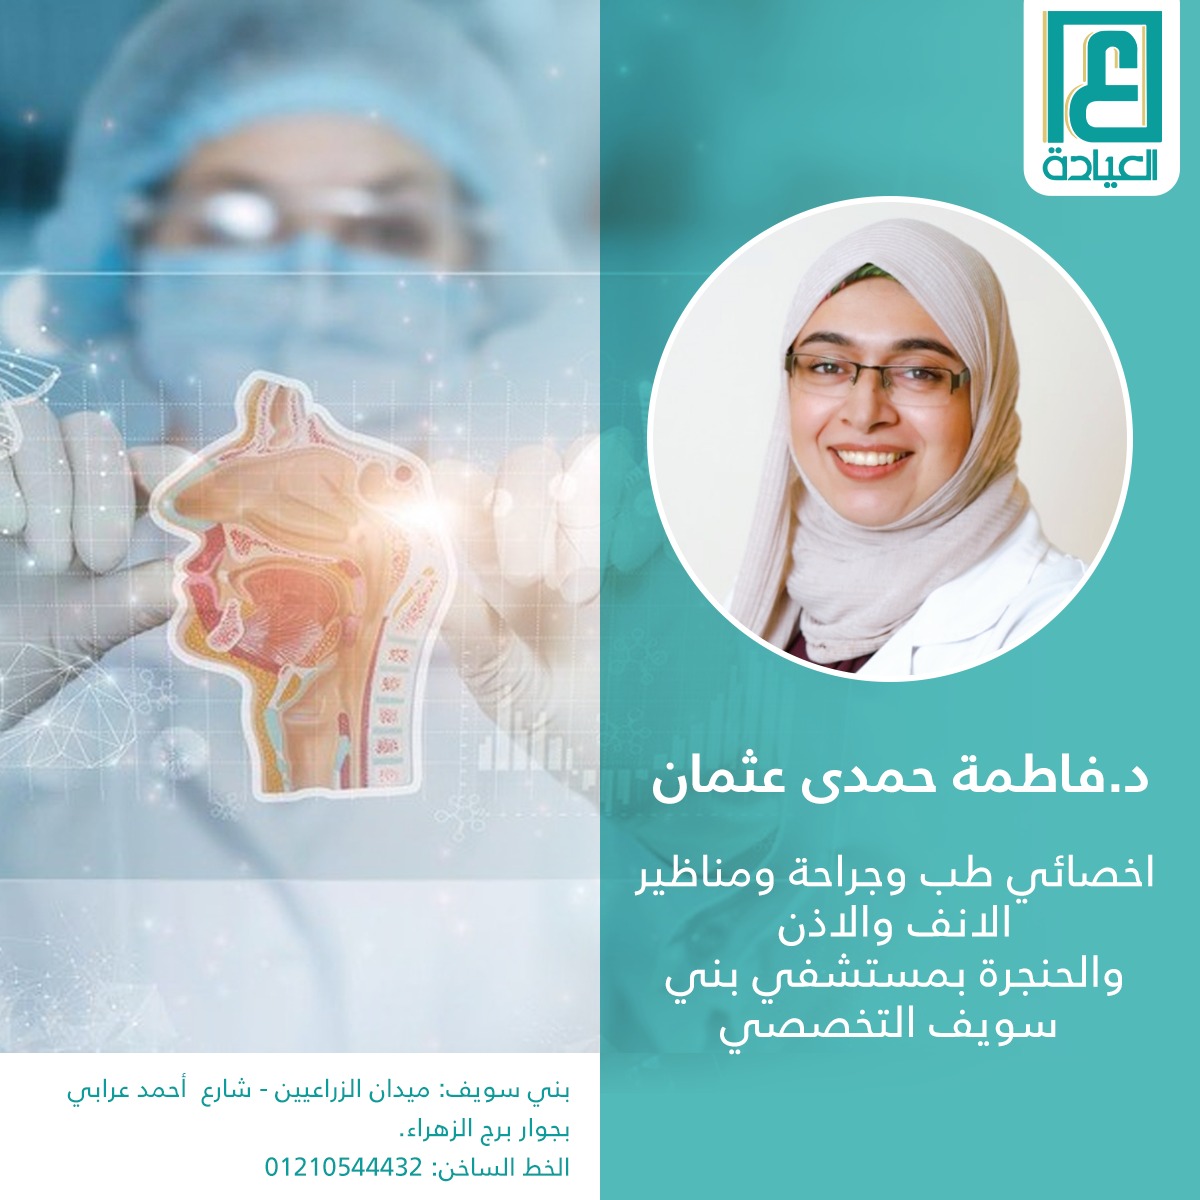 Dr. Fatma Hamdy